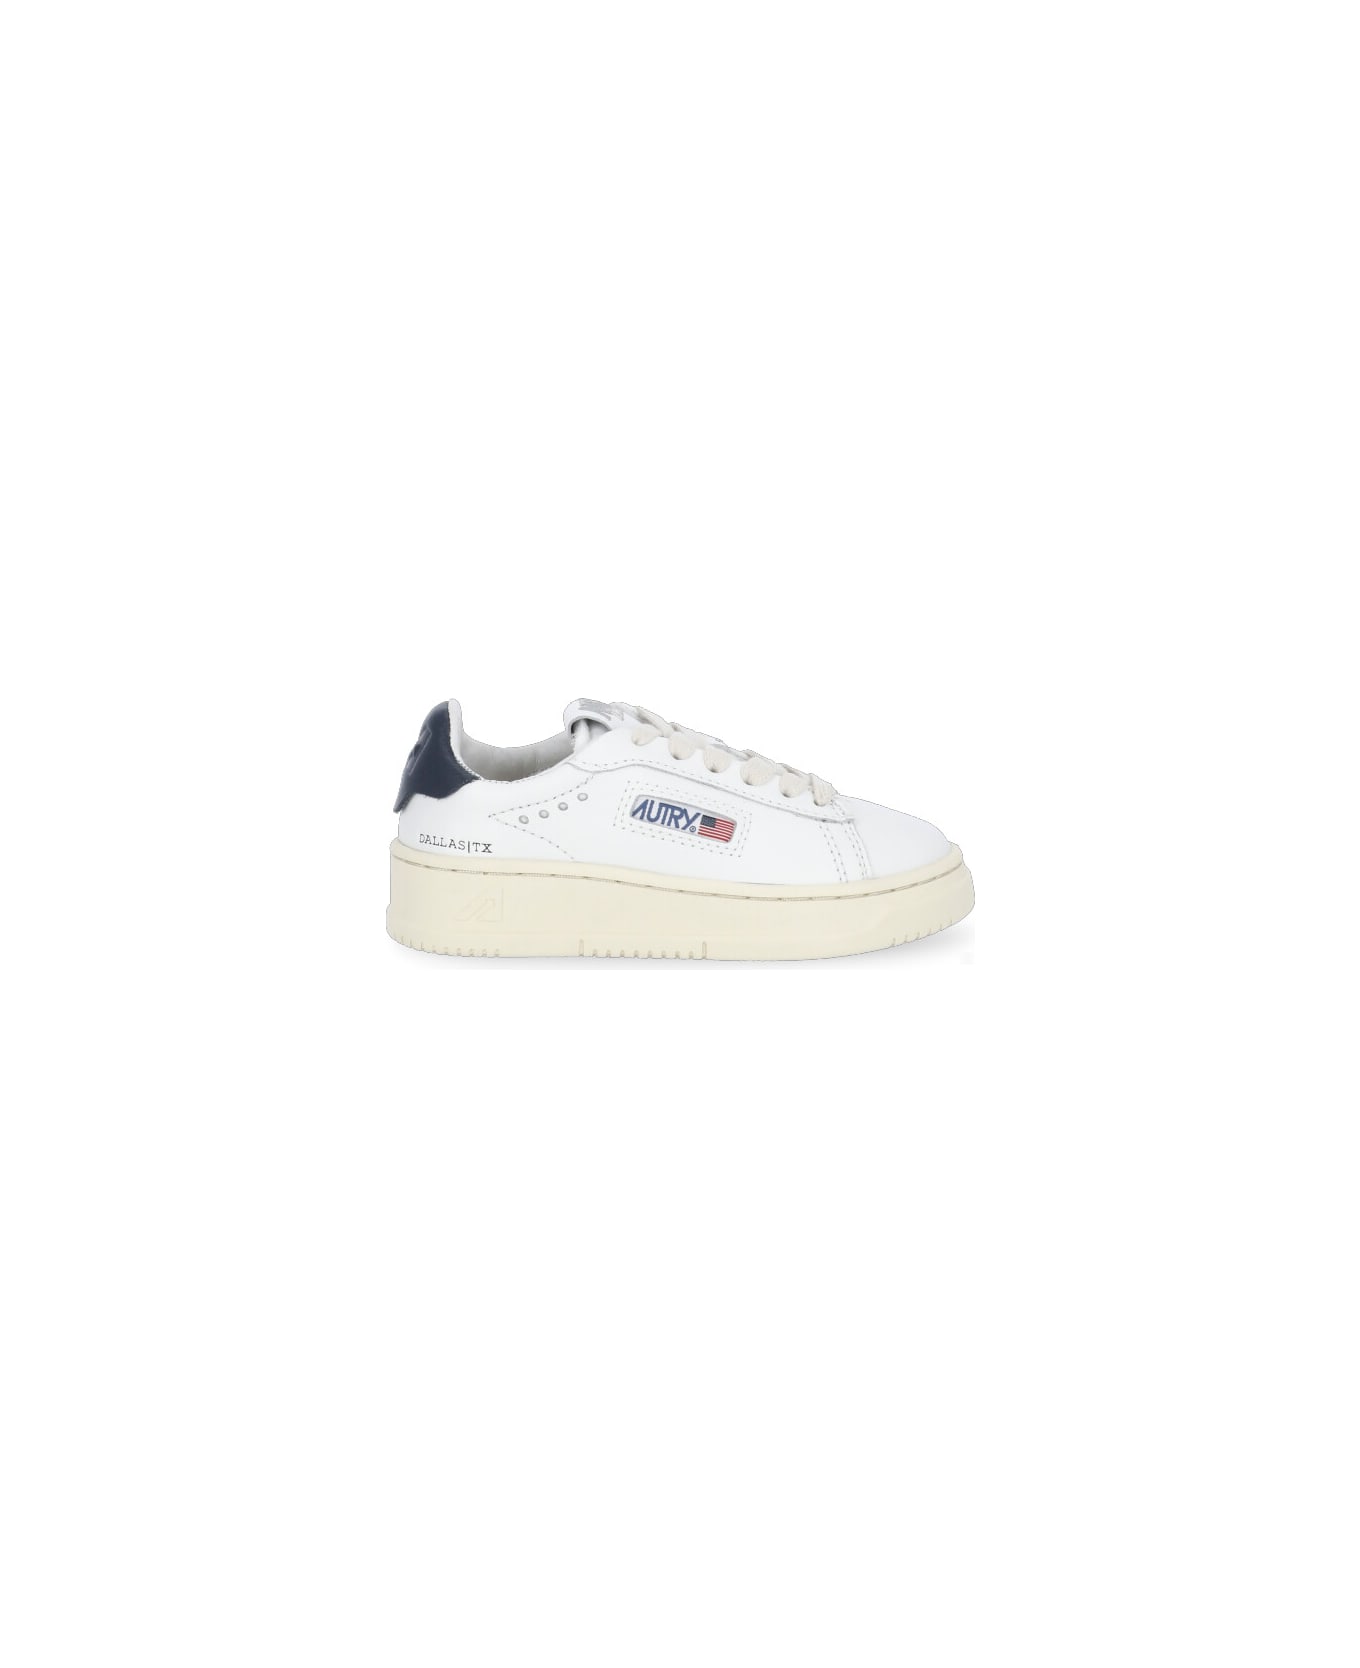 Autry Dallas Low Sneakers - White